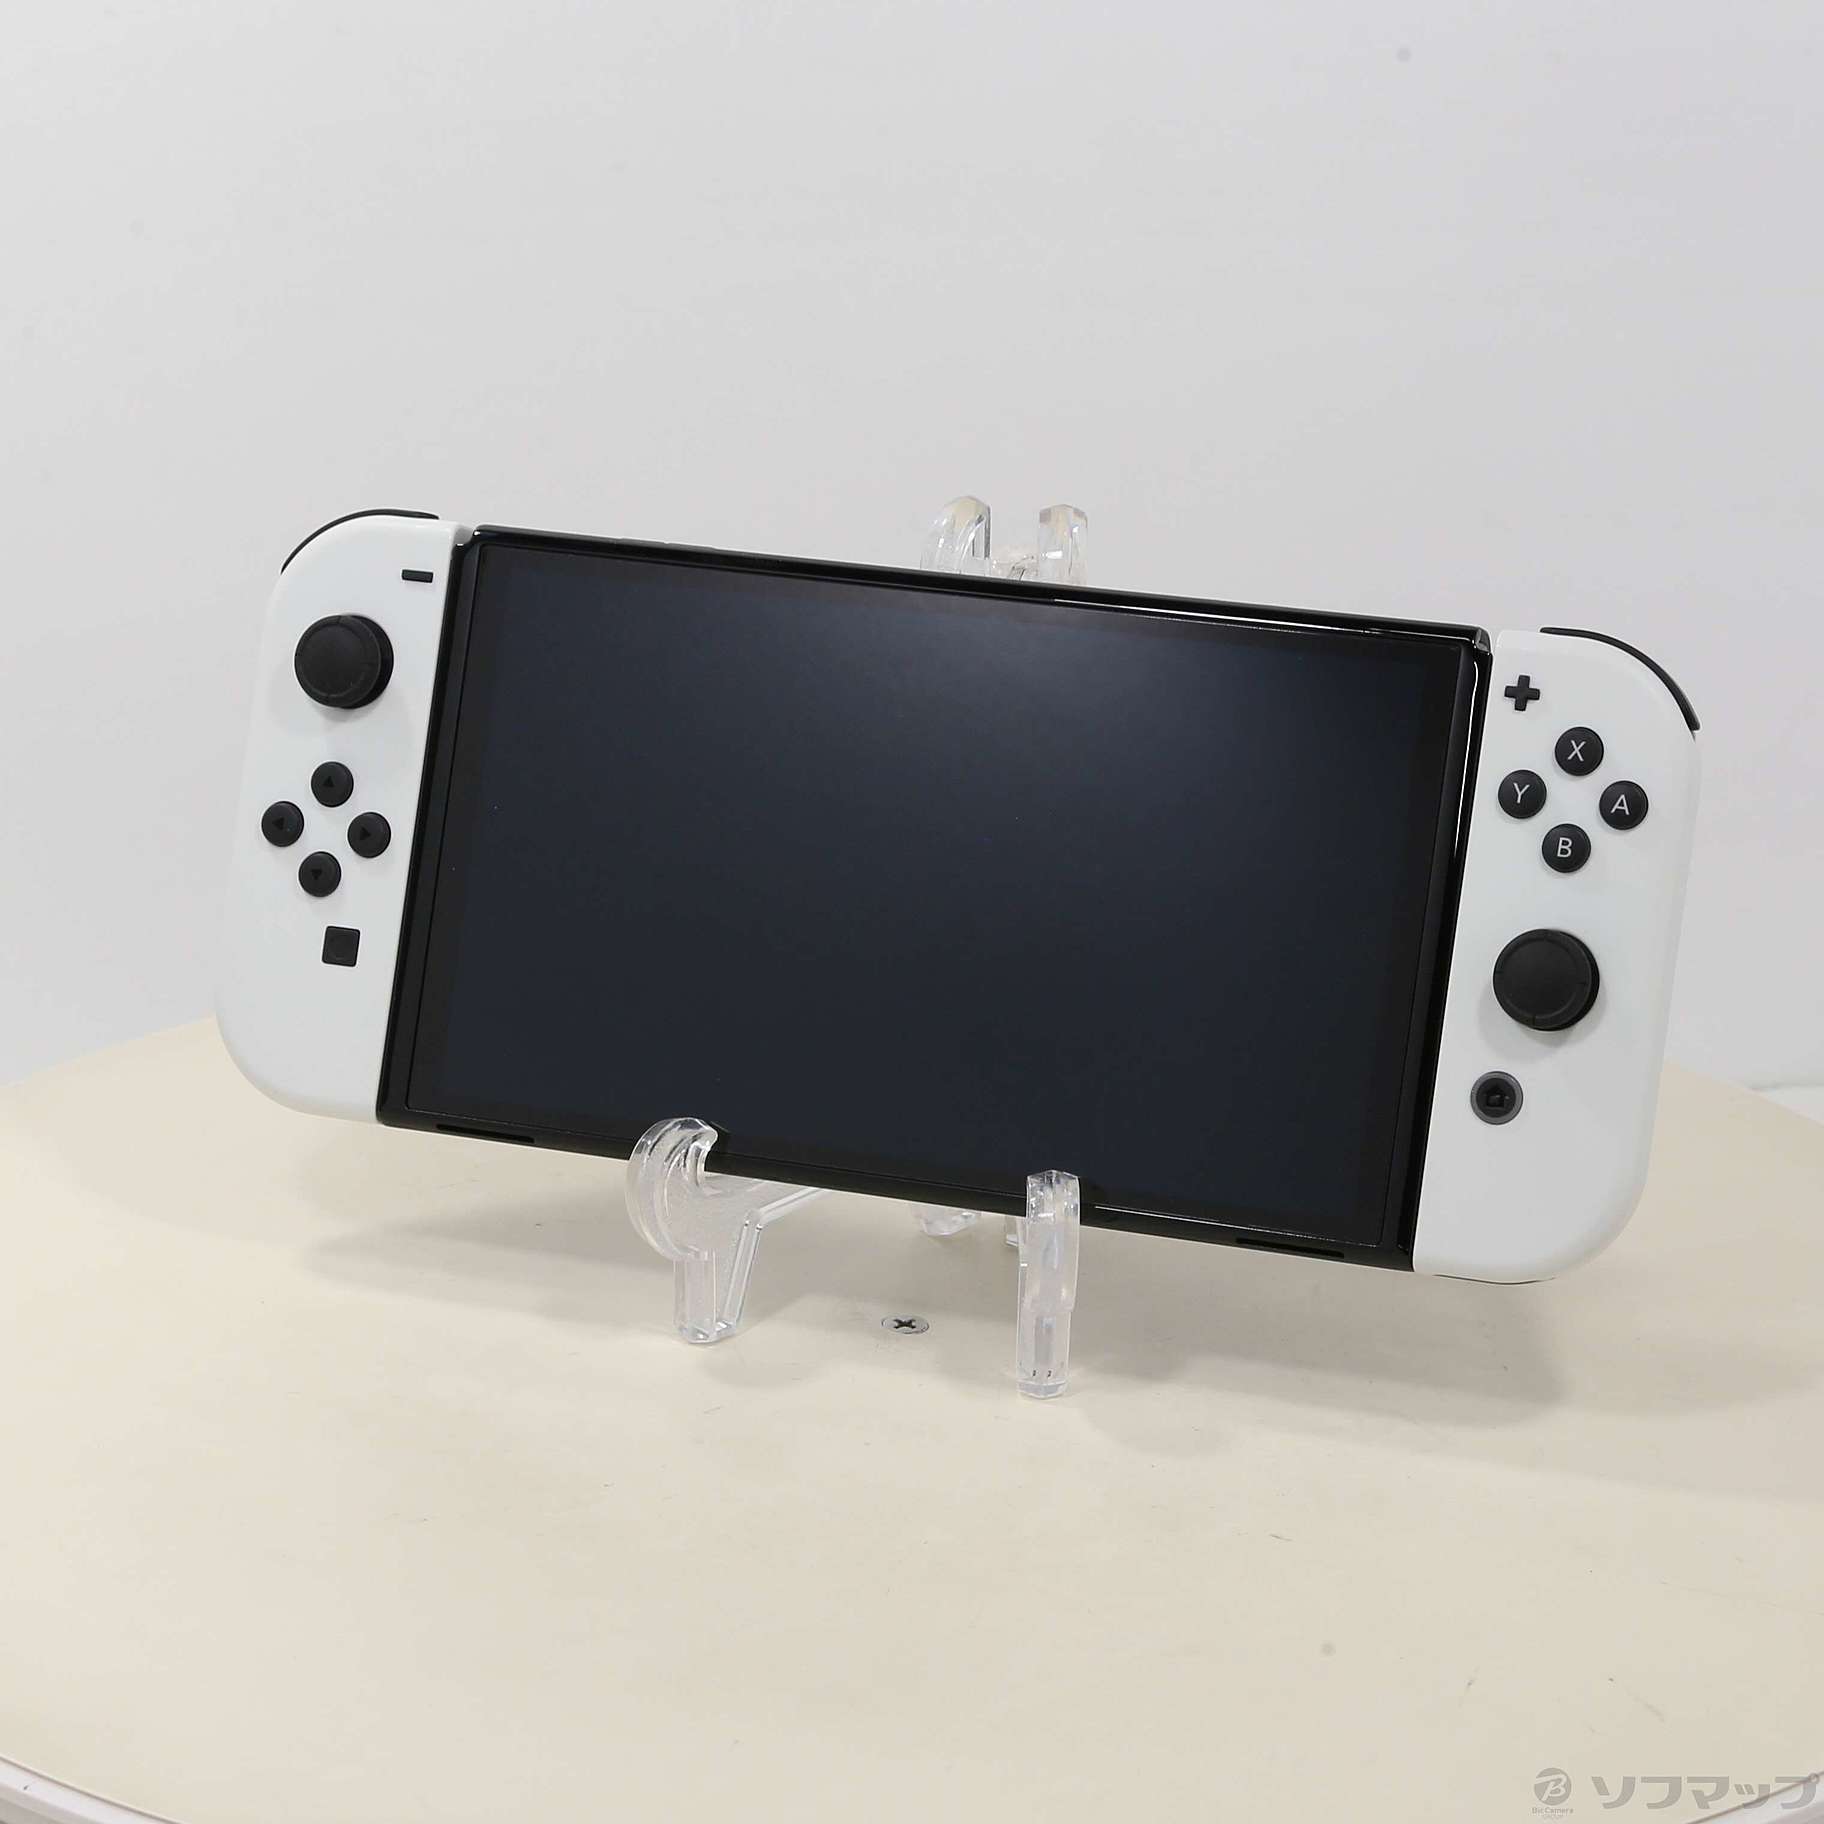 Nintendo Switch有機ELモデルJoy-Con(L)/(R)ホワイト家庭用ゲーム機本体